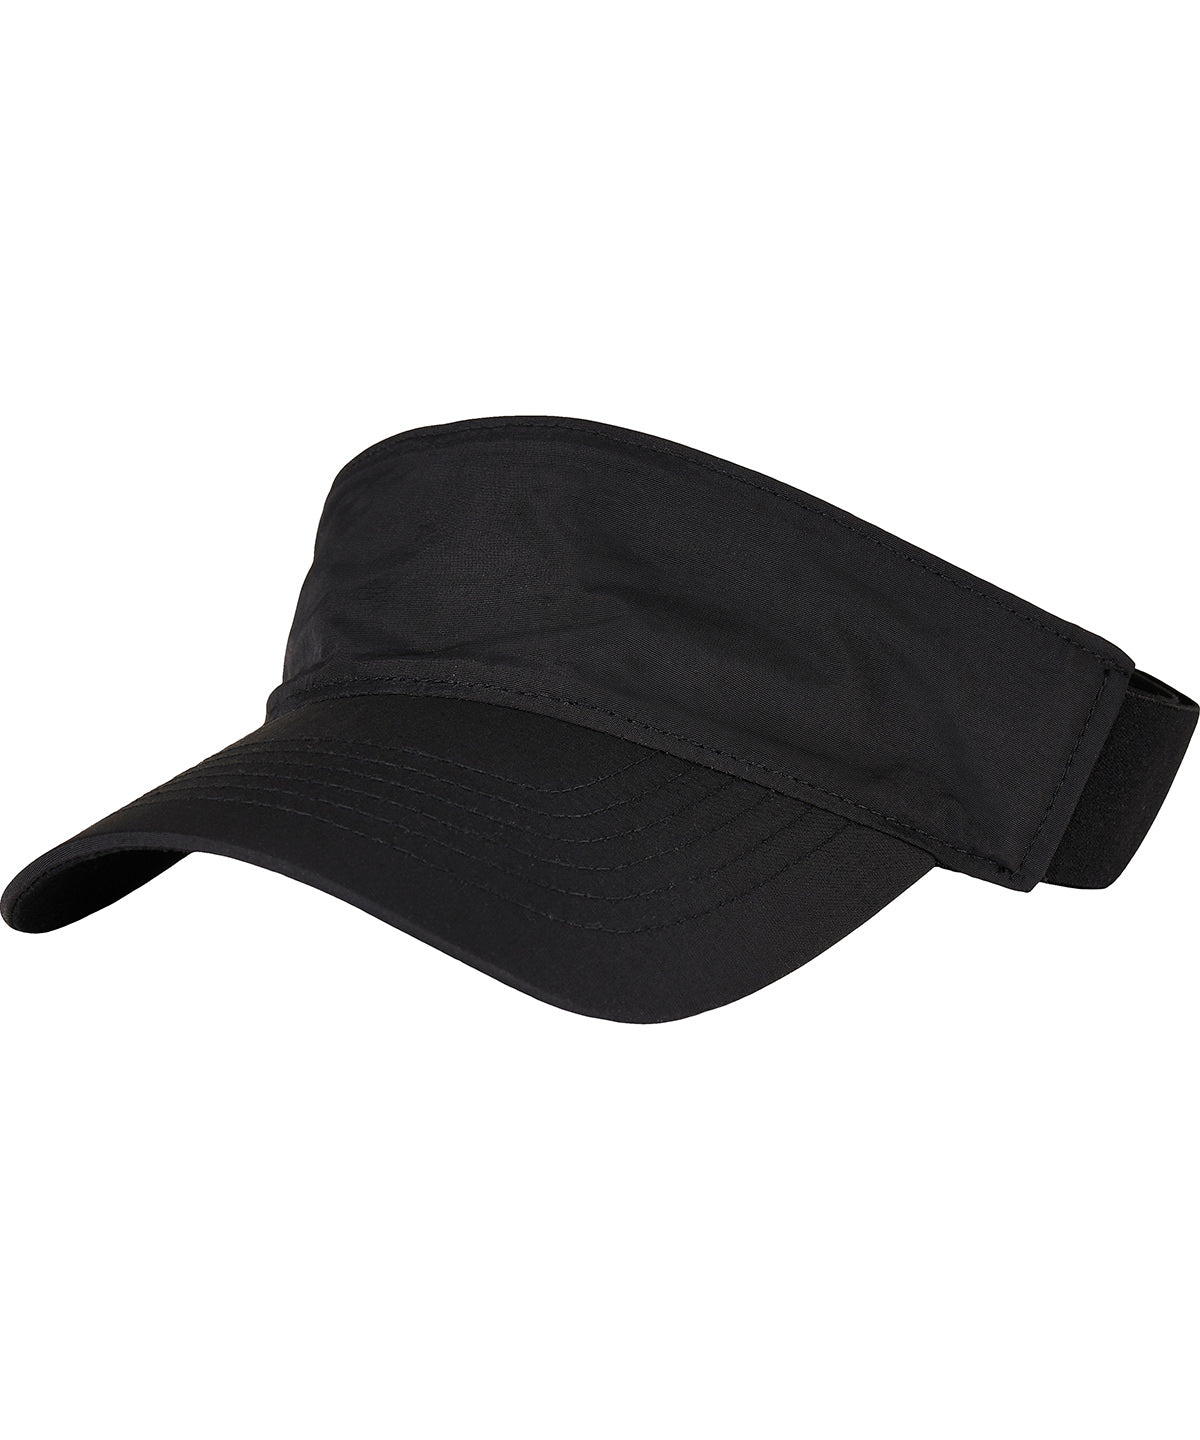 Personalised Caps - Black Flexfit by Yupoong Performance visor cap (8888PV)